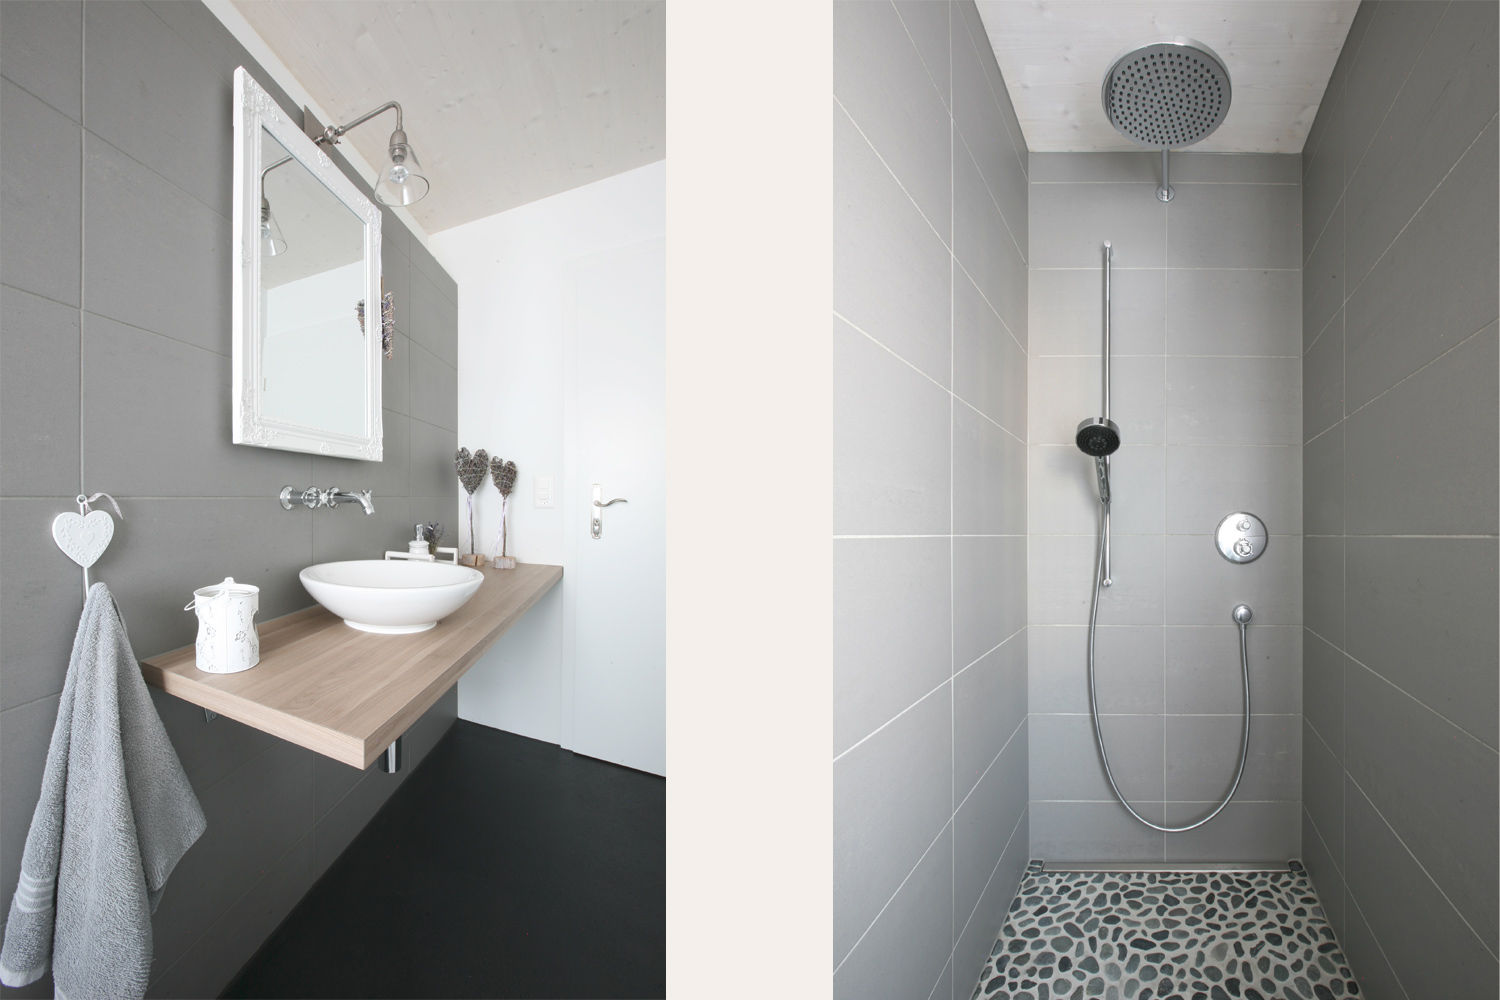 DFH Wängi, skizzenROLLE skizzenROLLE Country style bathroom